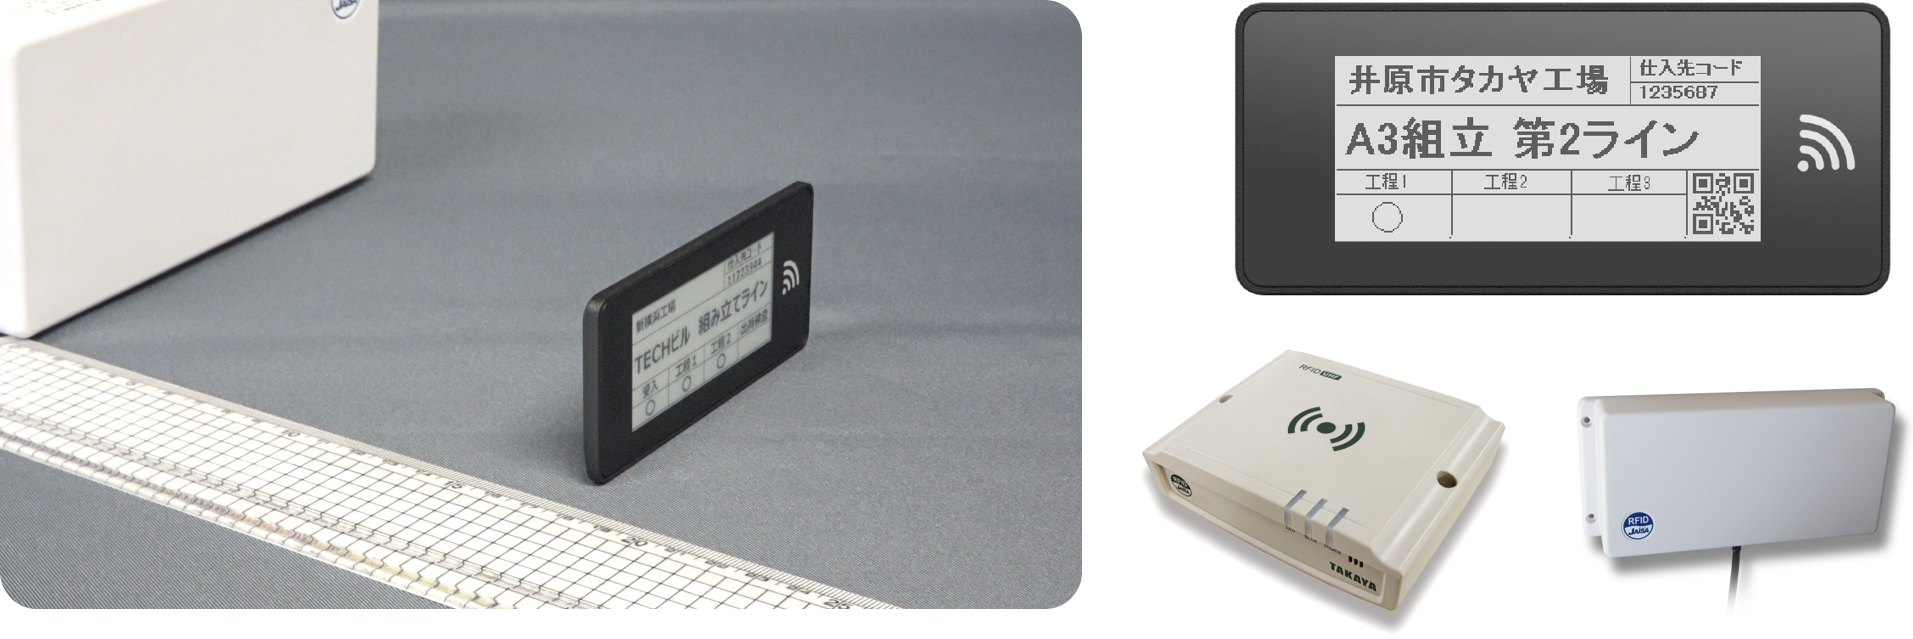 UHF帯RFID【バッテリーレス型電子ペーパー】スターターキットを発売